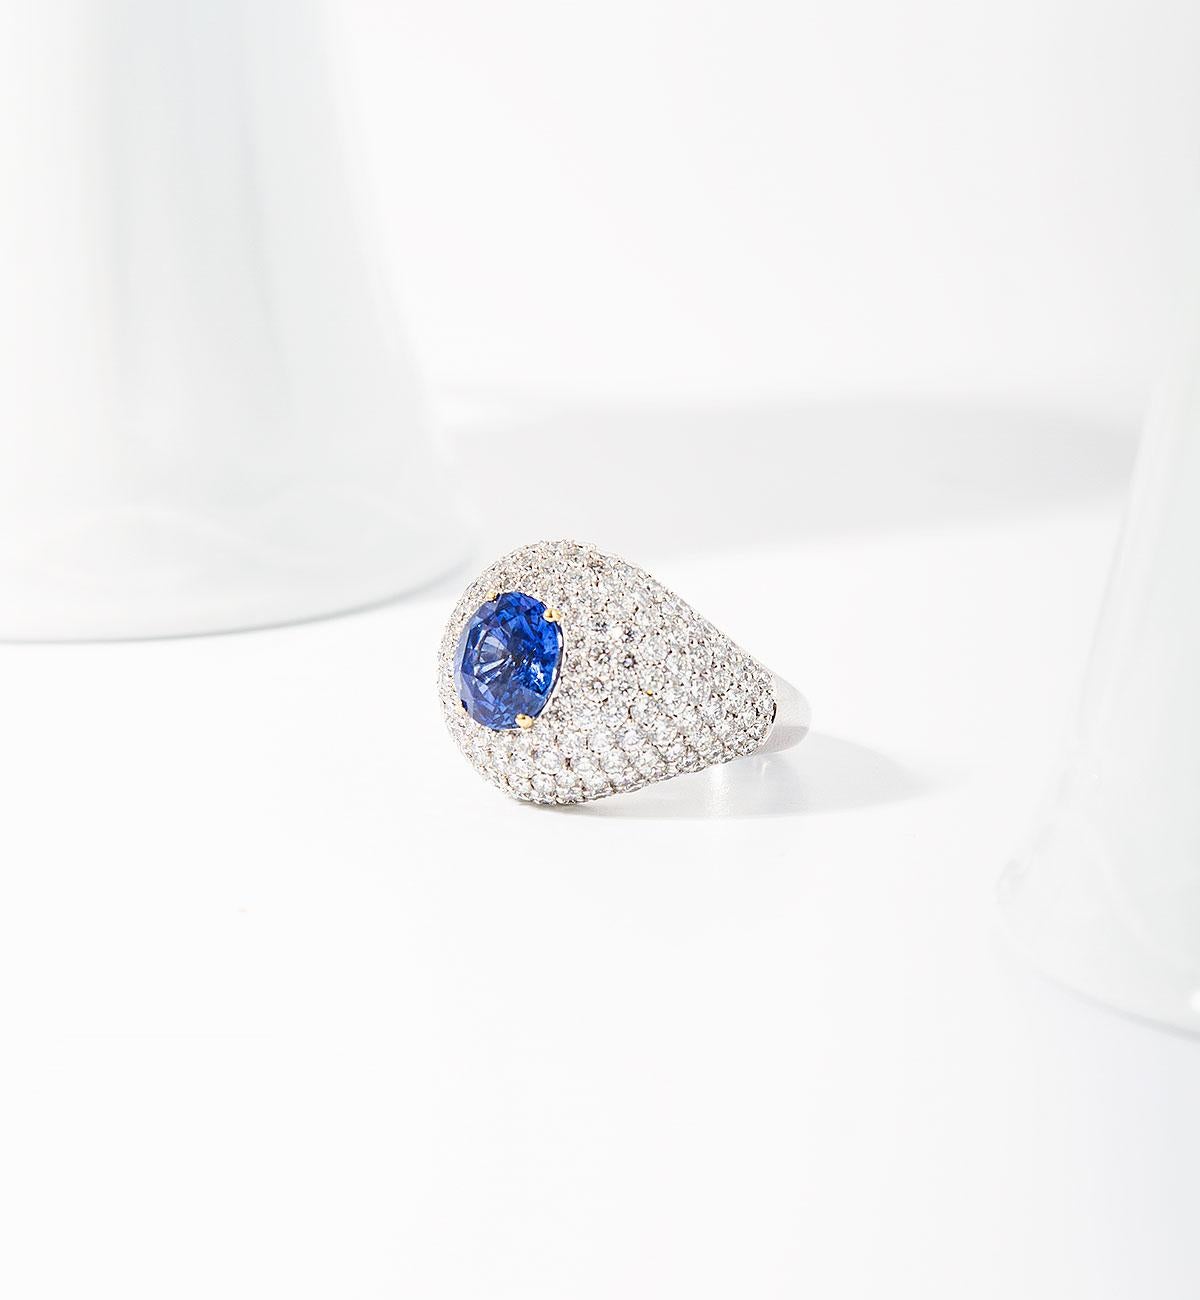 Sapphire ring
sapphire : 3,63 Ct's
diamond : 3,10 Ct's  G VVS2

total weights : 13.85 gr